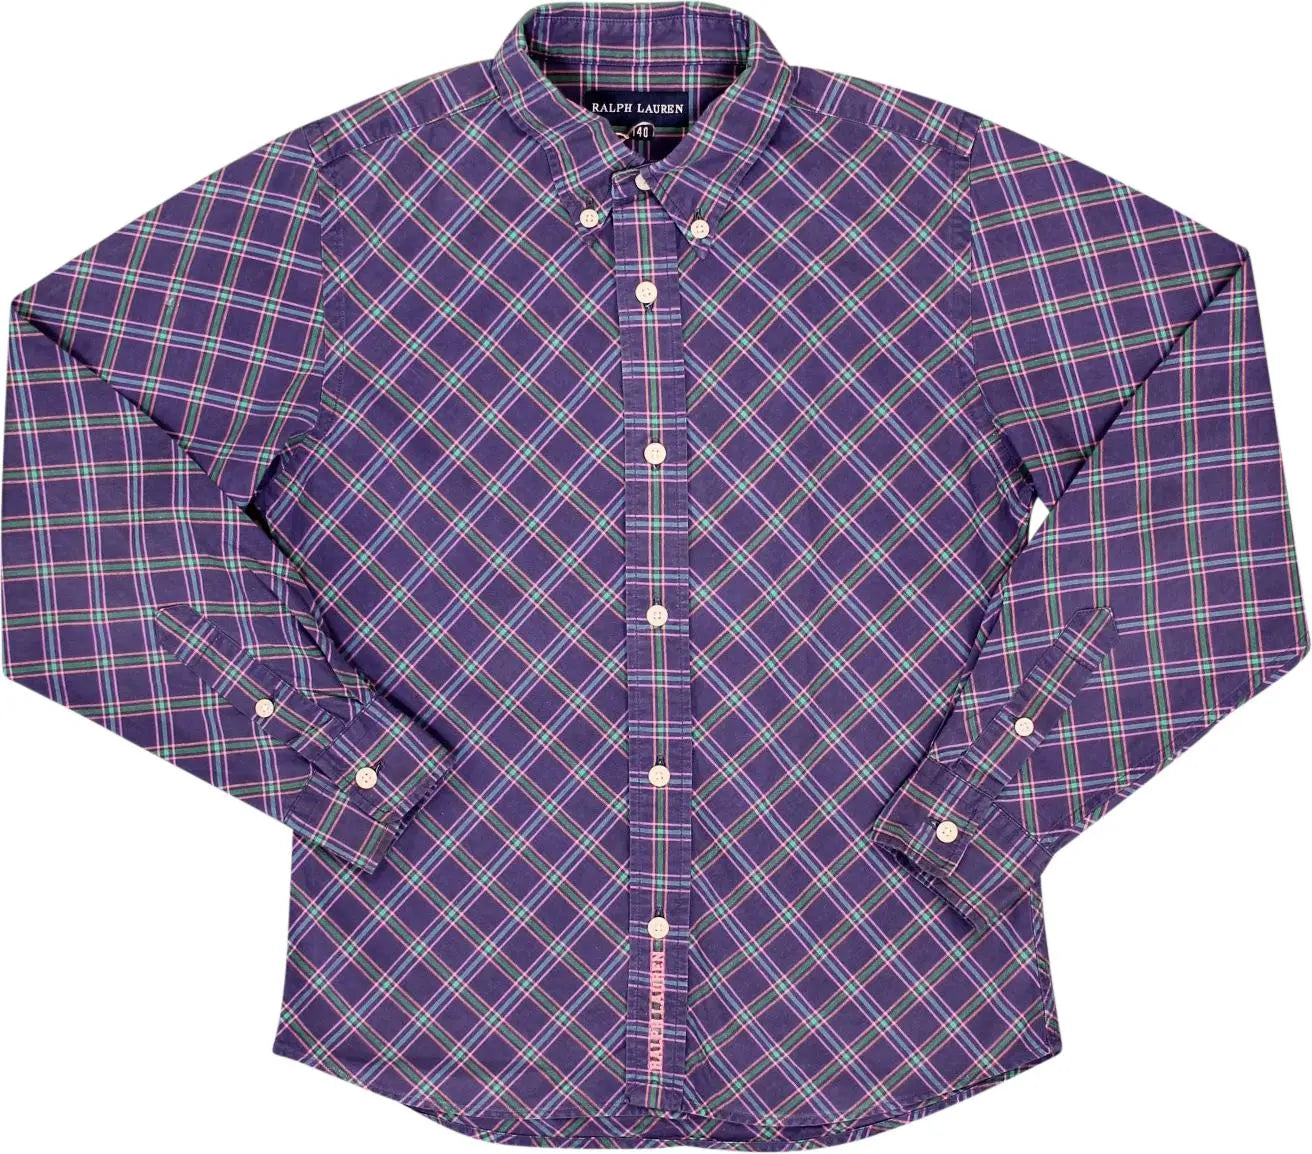 Ralph Lauren - Purple Blouse by Ralph Lauren- ThriftTale.com - Vintage and second handclothing